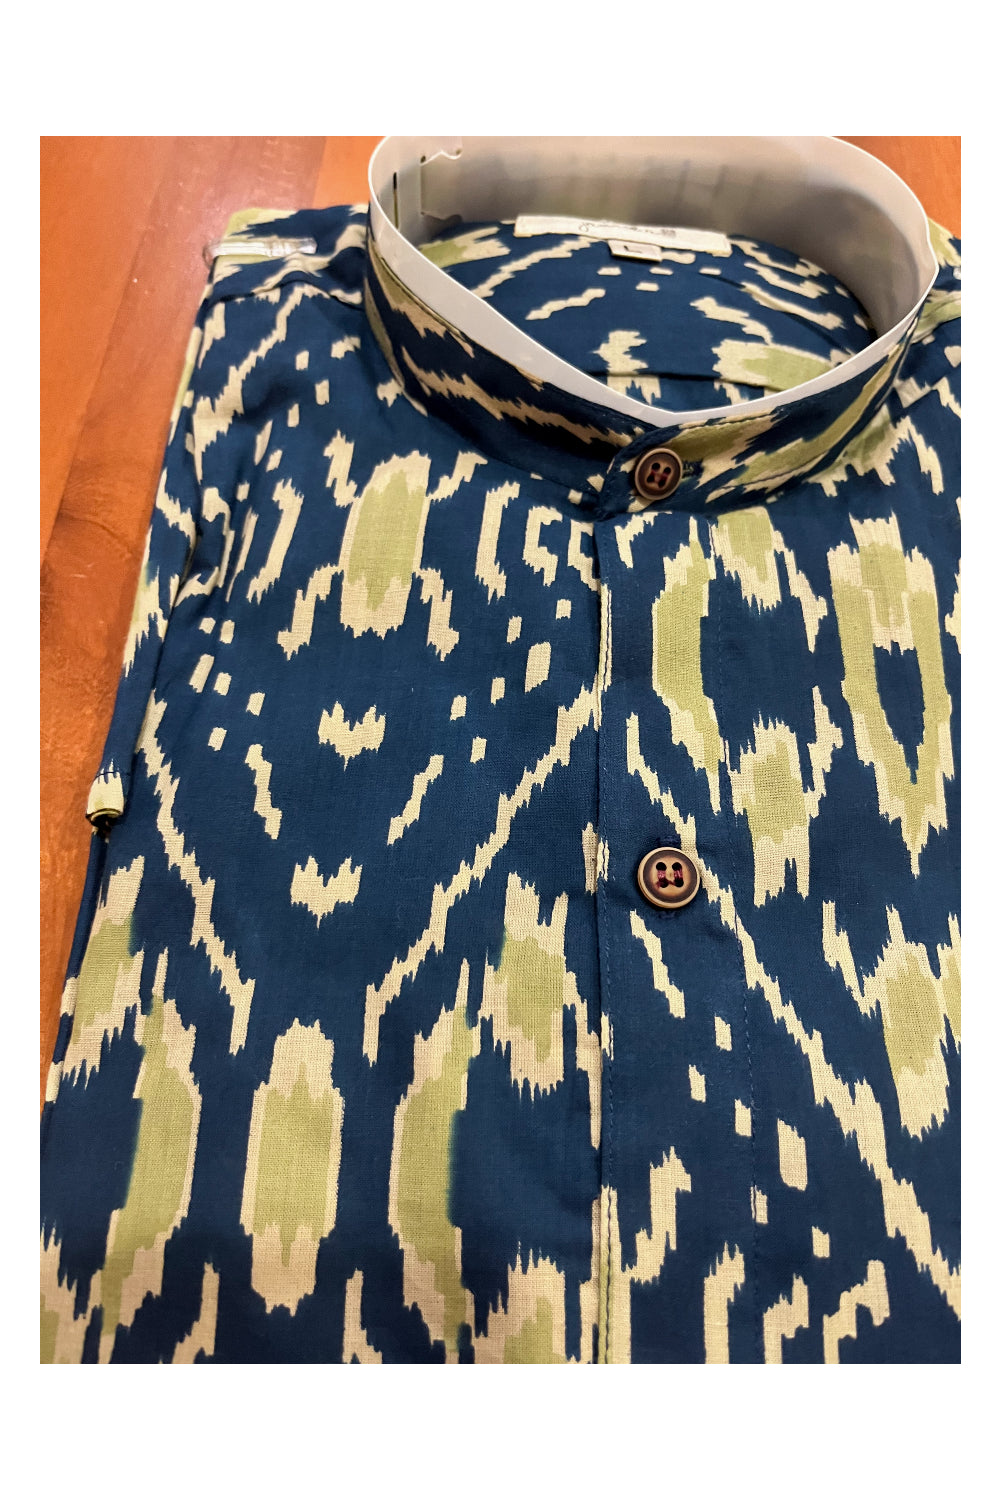 Southloom Jaipur Cotton Blue Green Hand Block Printed Mandarin Collar Shirt (Full Sleeves)